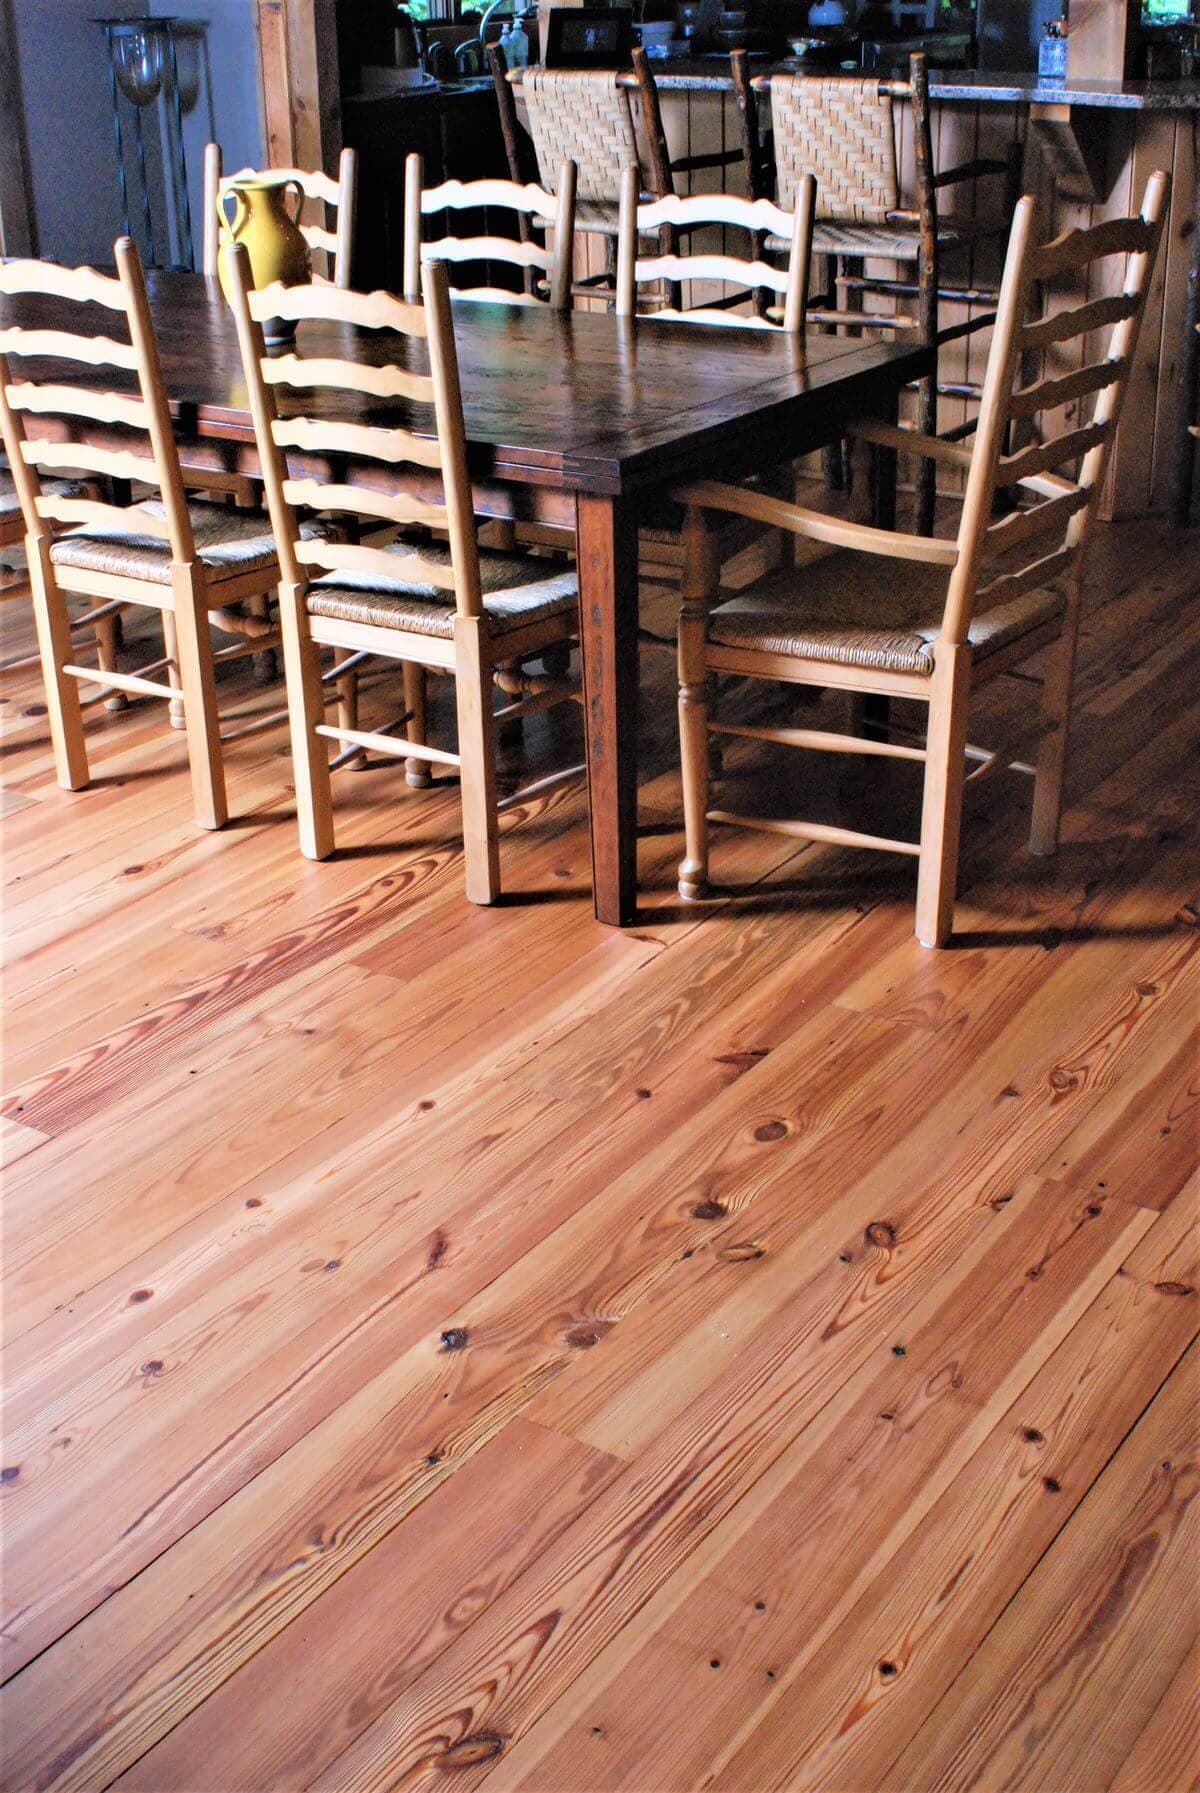 Beautiful wood flooring in dining room showcase refined wood aesthetic.